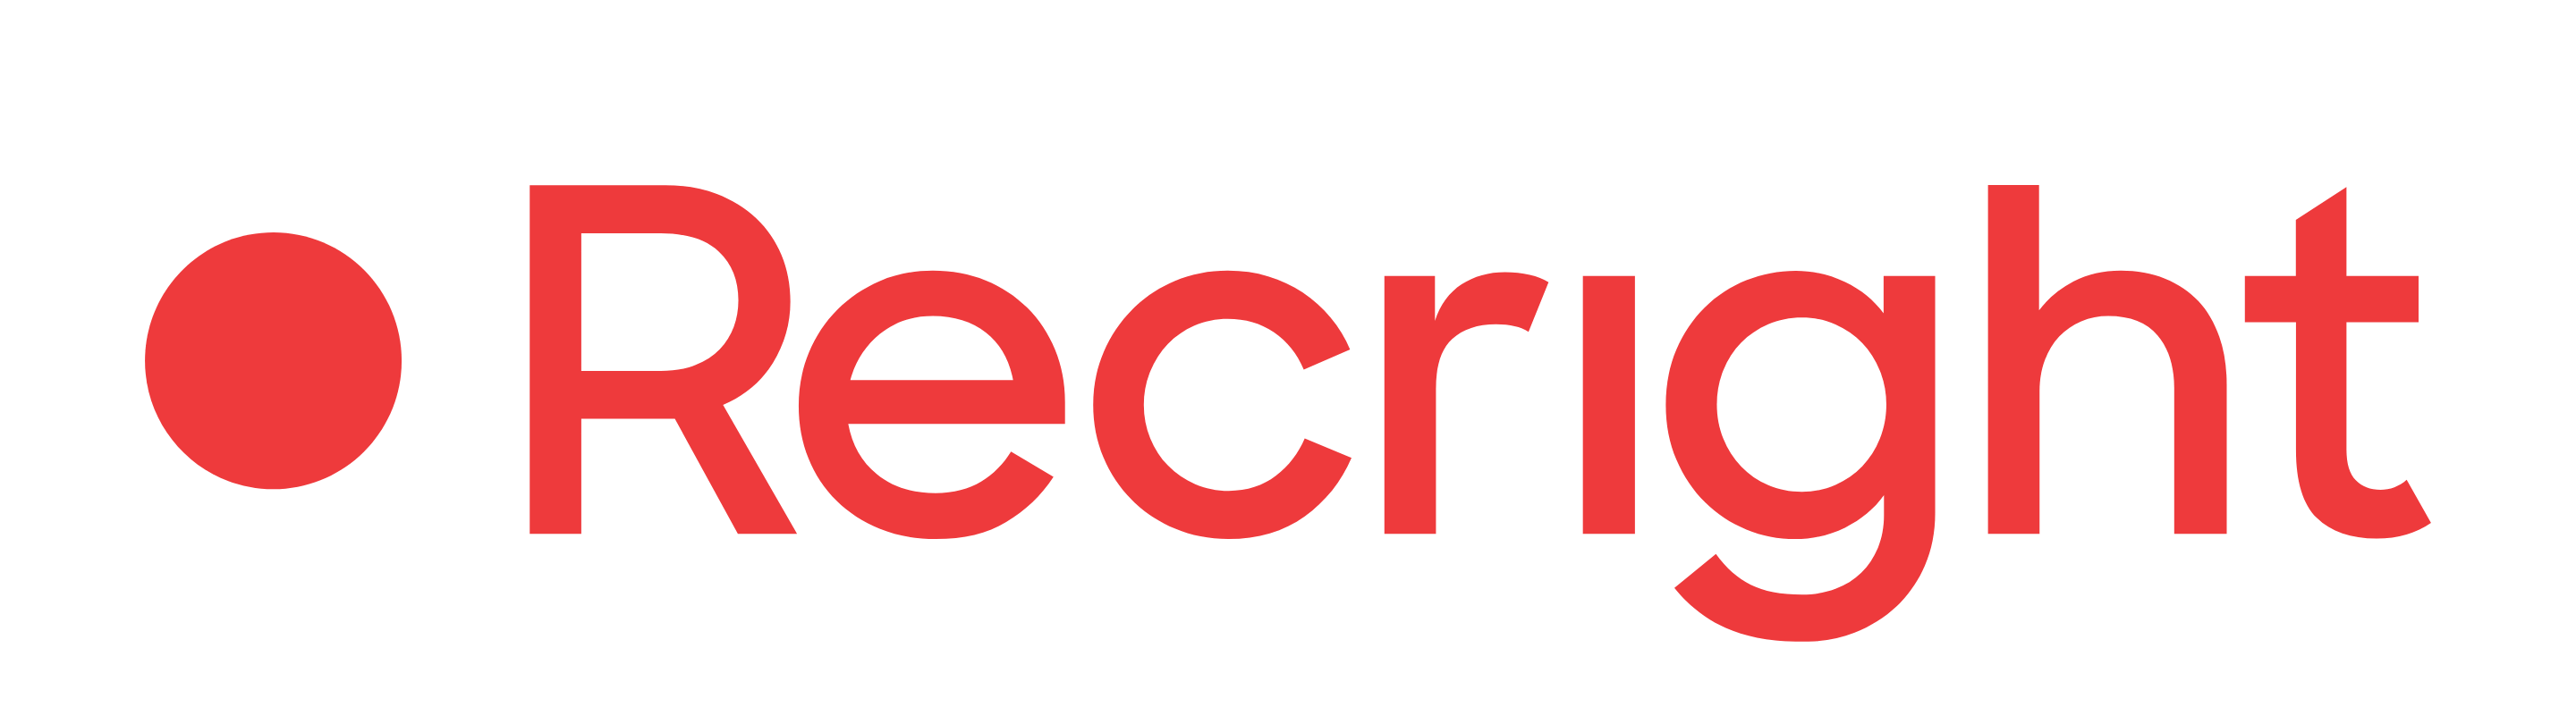 recright logo